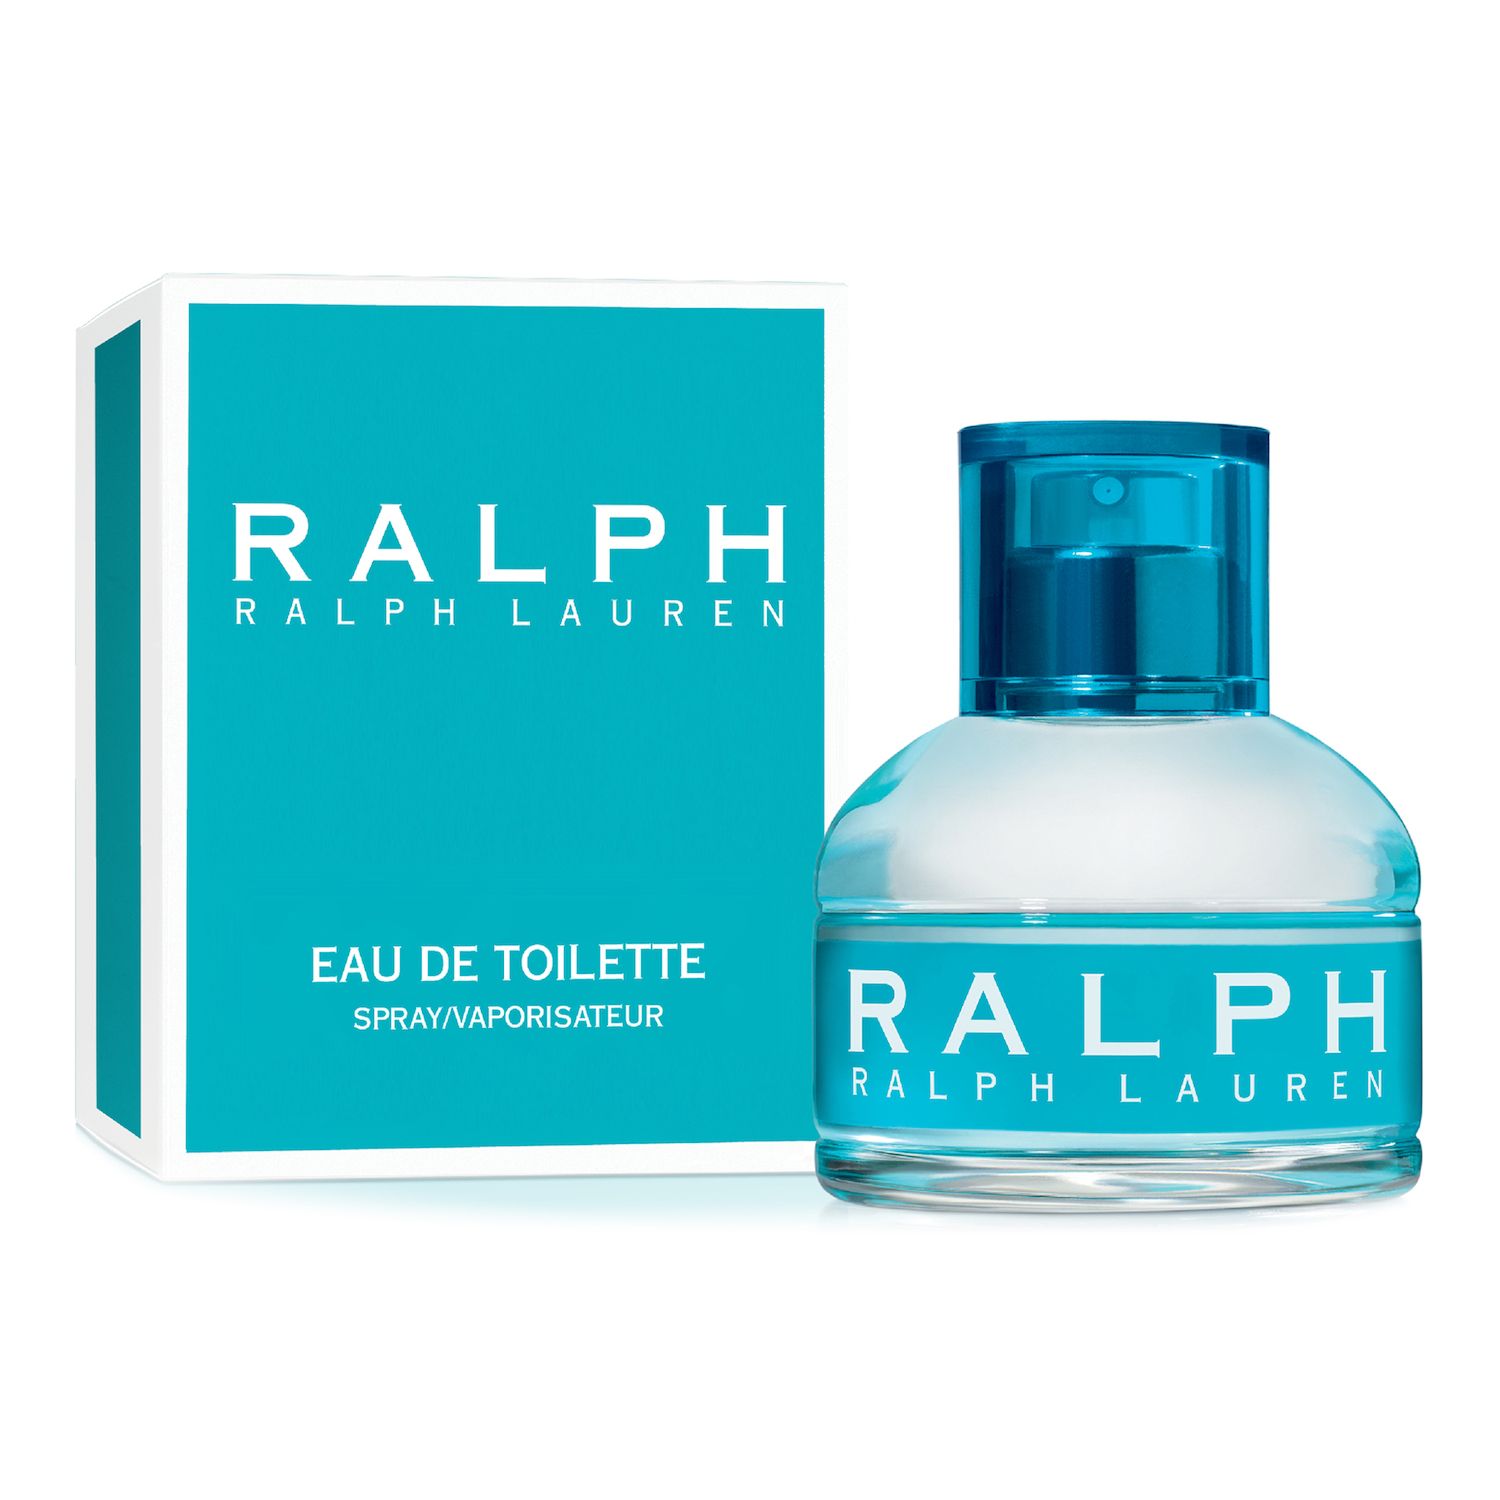 Ralph Lauren Blue Women's Perfume - Eau 